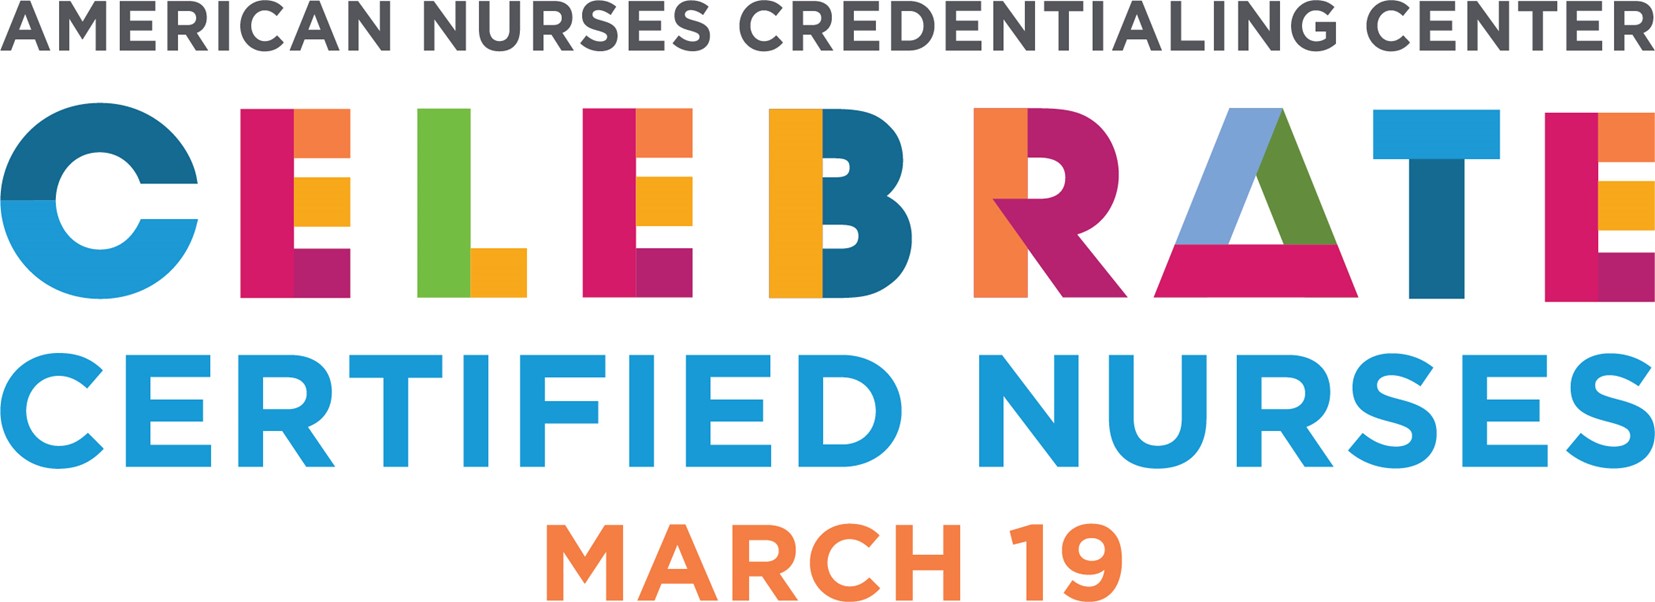 BWFH celebrates Certified Nurses Day